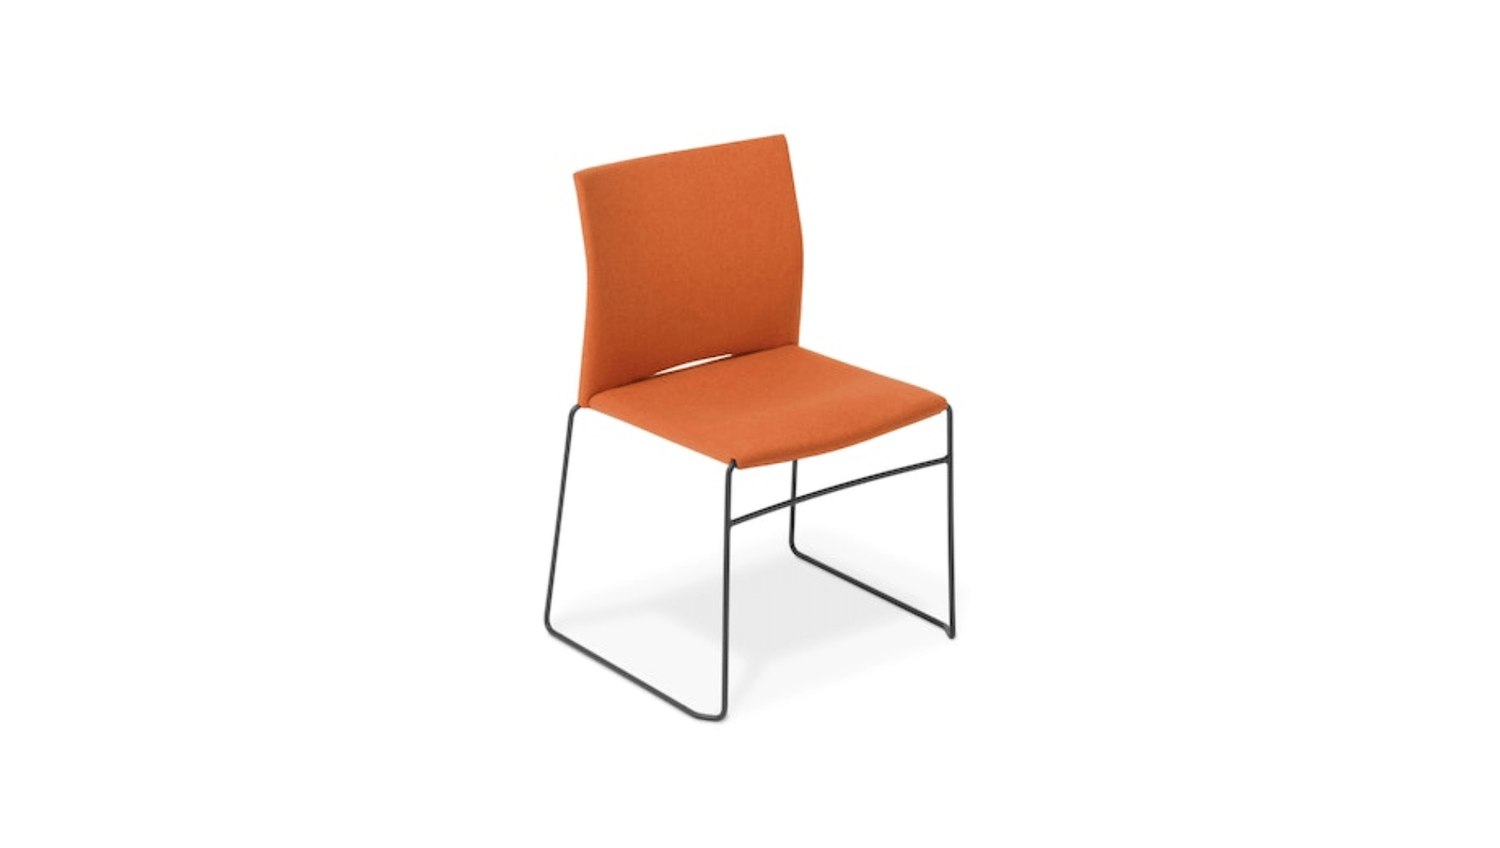 Seating Fully Upholstered - Quantum Bond Artisan Keylargo / Standard Web Chair